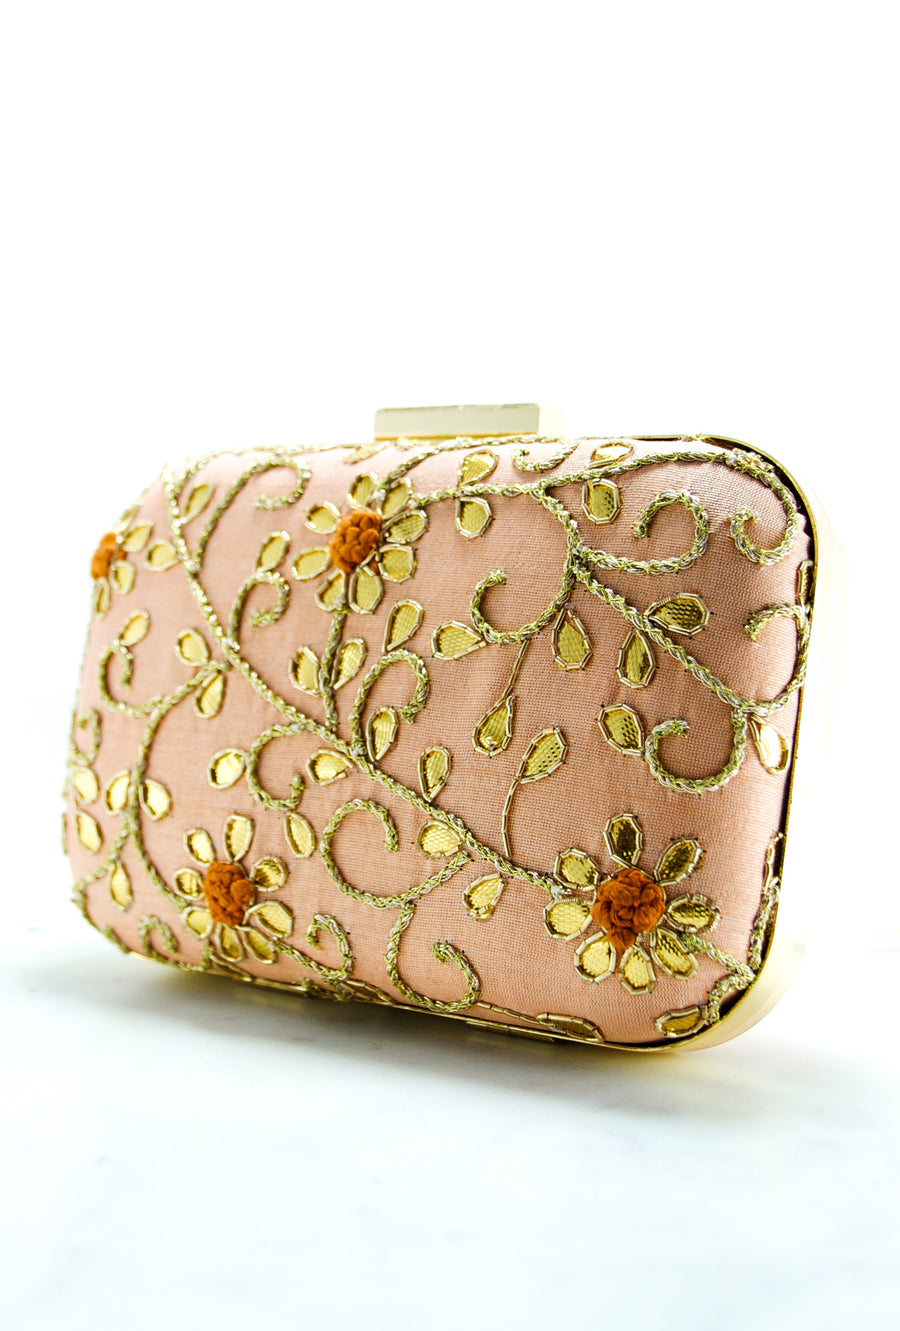 Fancy Walas Presents Designer Handicraft Women's Bridal Clutch Bag Handbag  Purse for women's, Wedding clutches for ladies Wallet (Gold) : Amazon.in:  Fashion